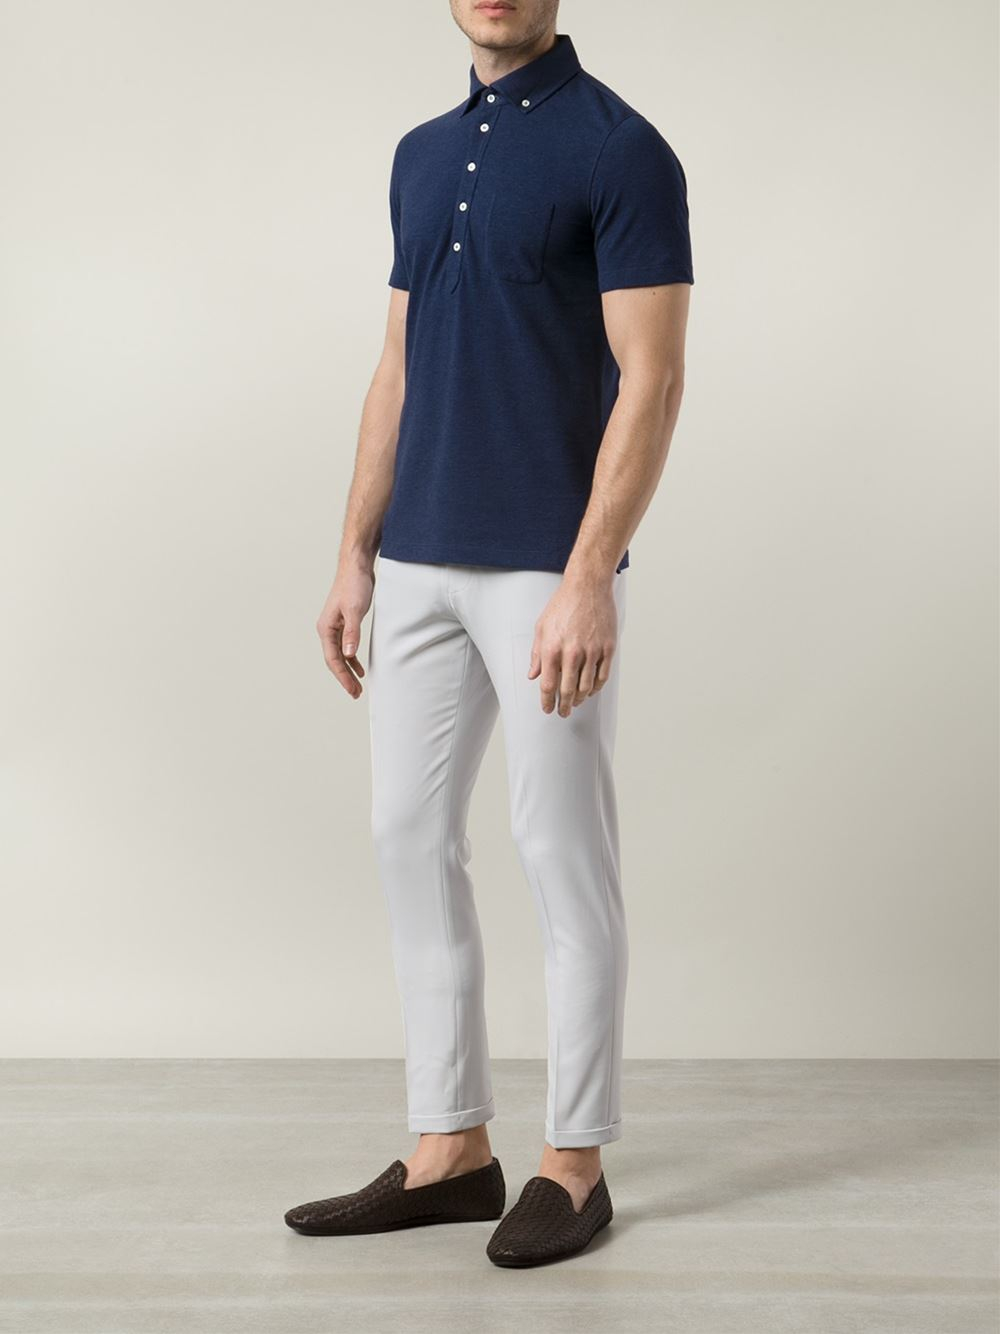 Lyst - Brunello Cucinelli Button-Down Collar Polo Shirt in Blue for Men